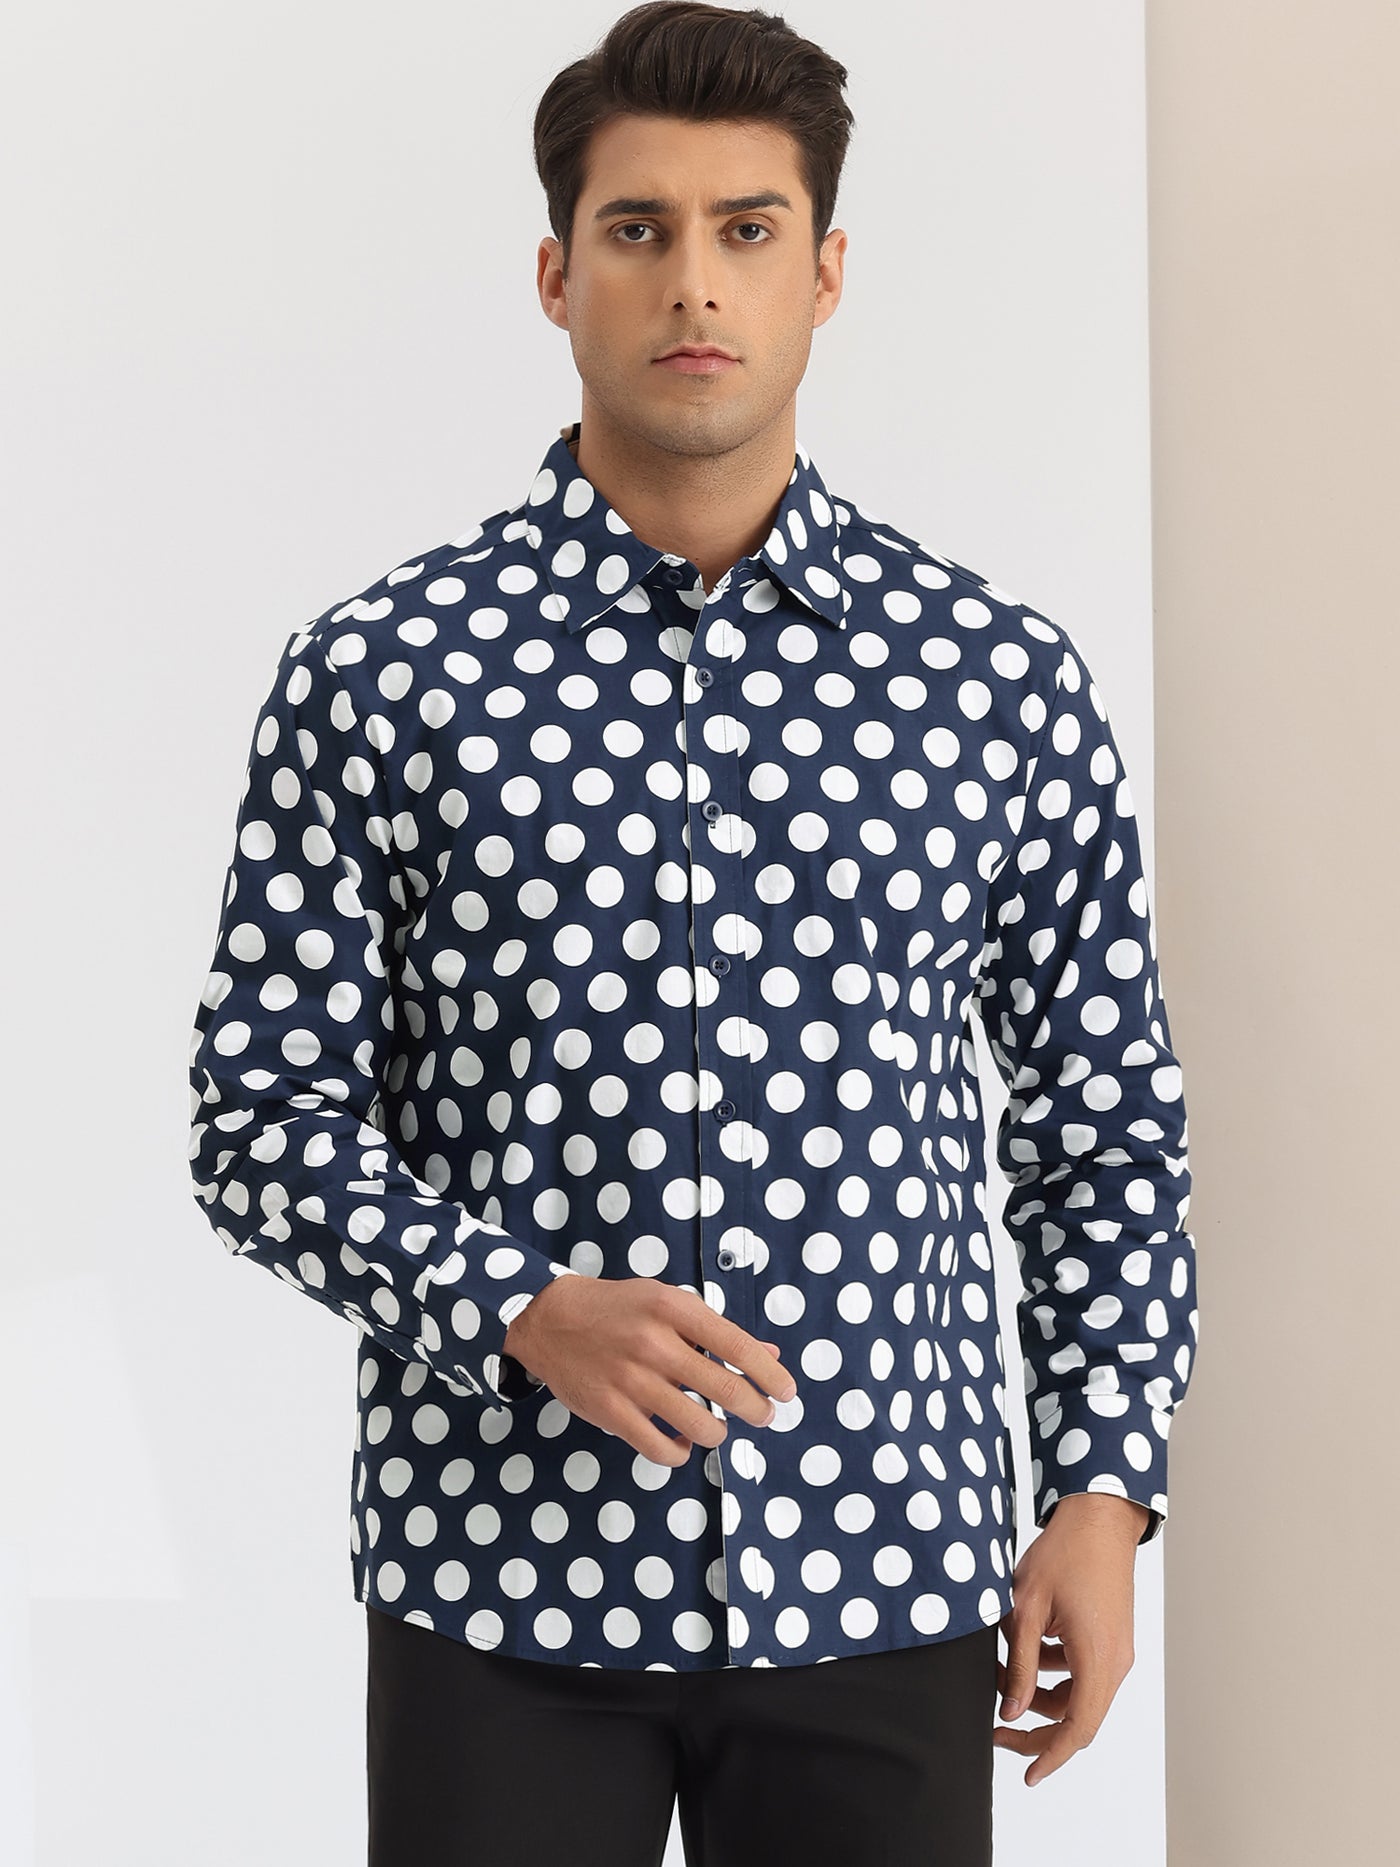 Bublédon Polka Dots Formal Shirts for Men's Point Collar Long Sleeves Dress Shirt